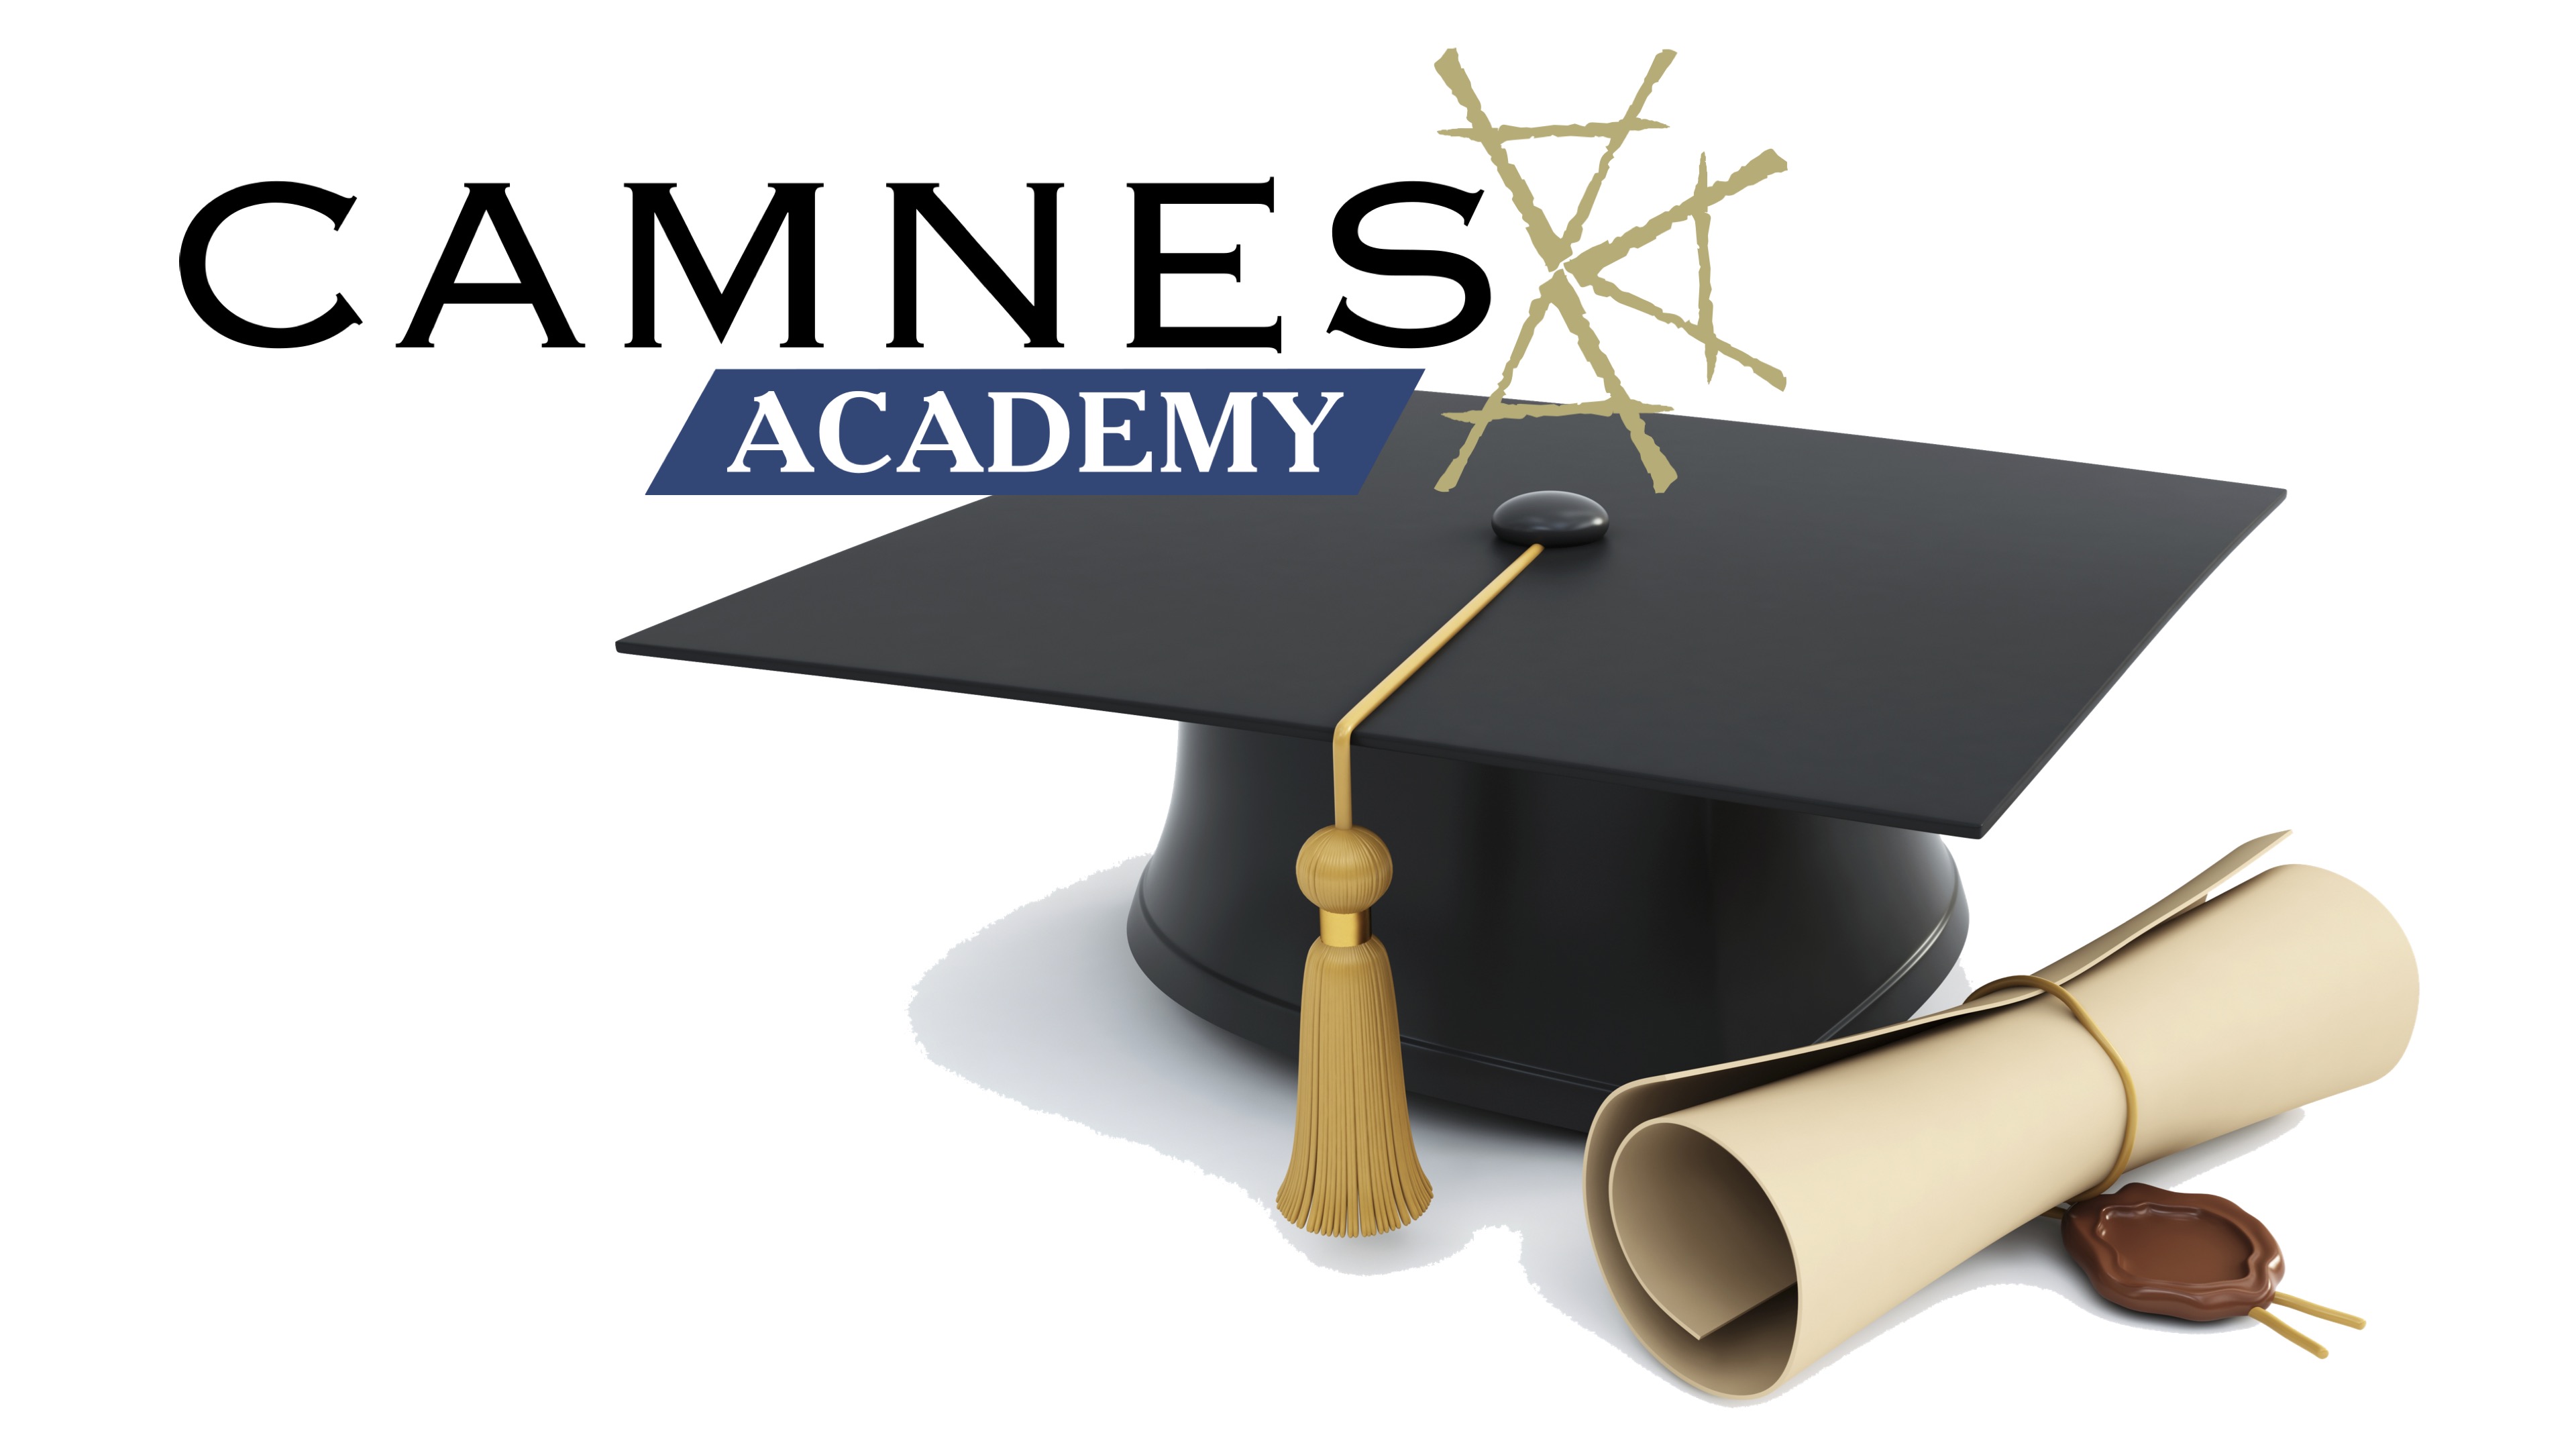 CAMNES Academy